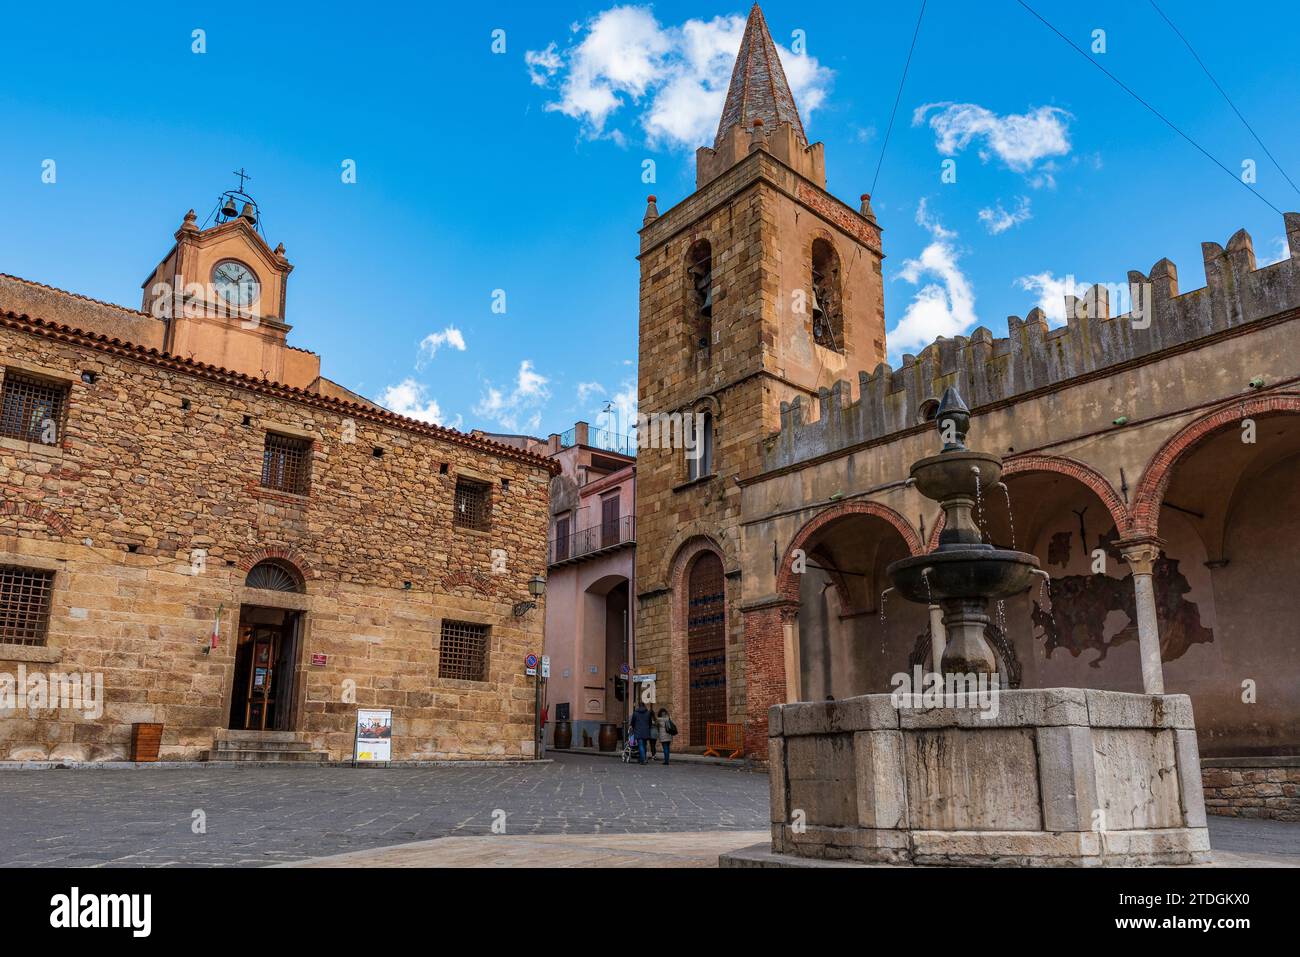 The historic center of Castelbuono medieval village, Sicily Stock Photo